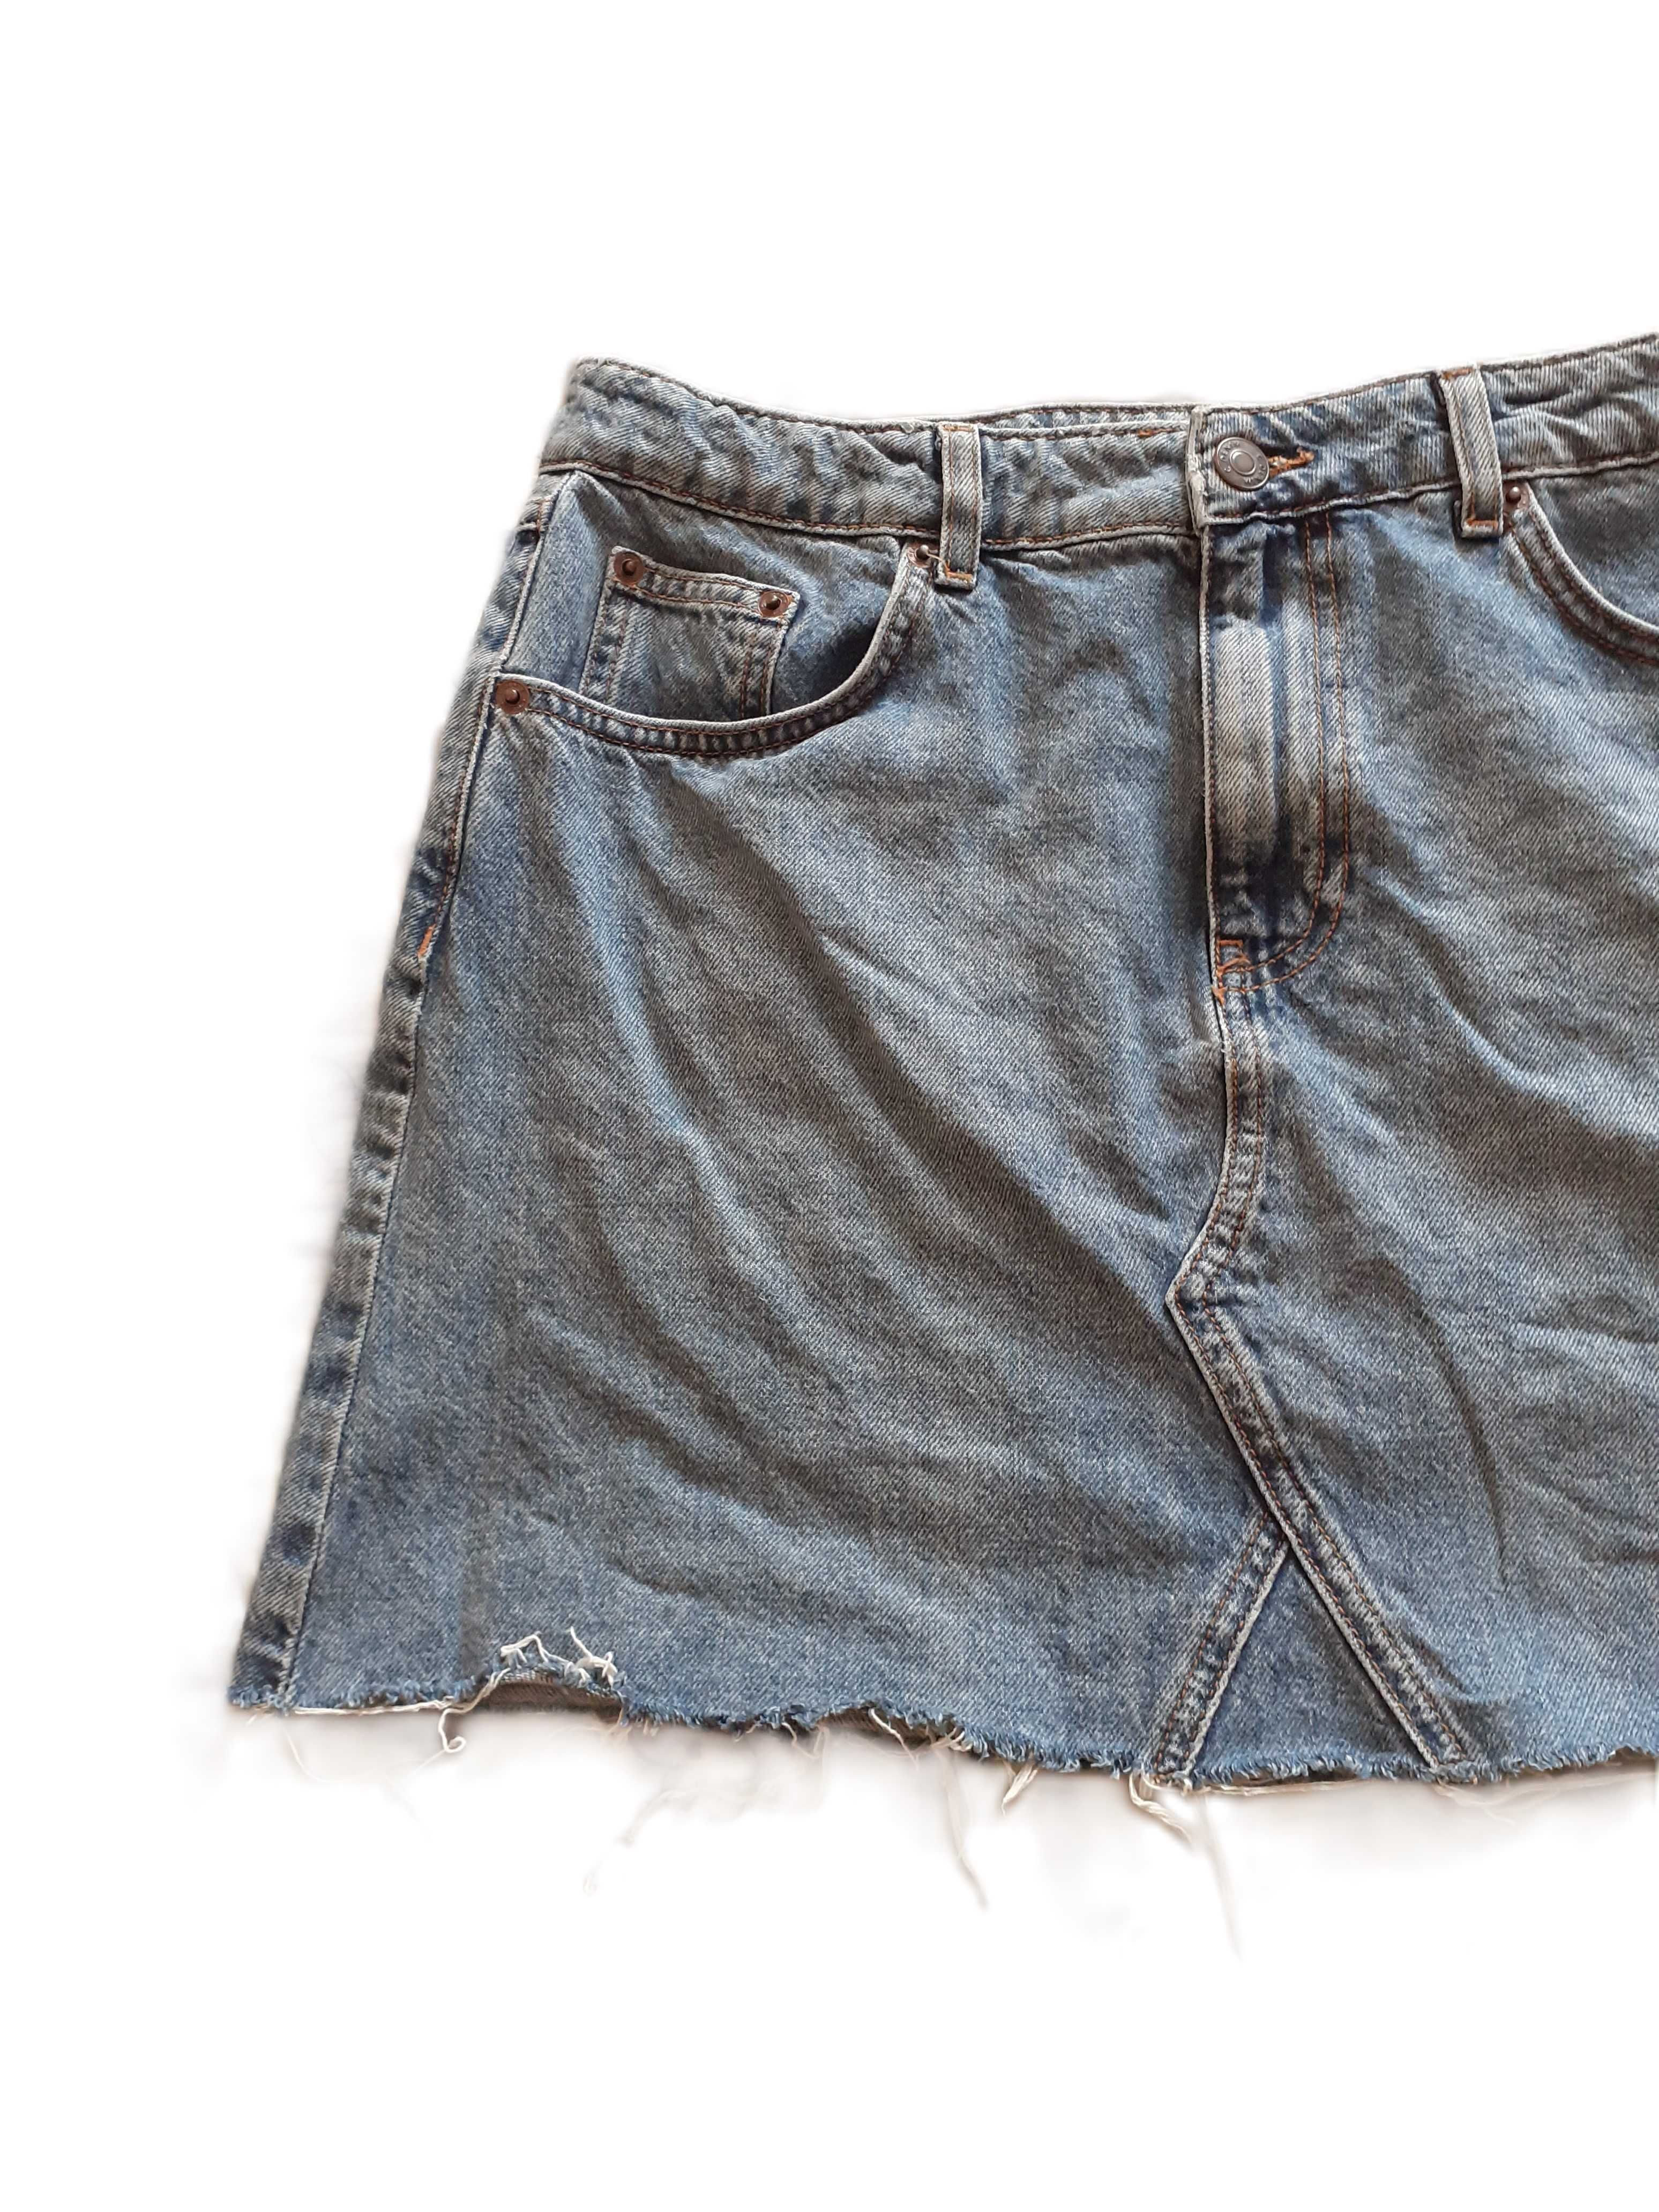 40 Spódnica dżinsowa jeansowa krótka mini styl Y2K vintage retro Cubus